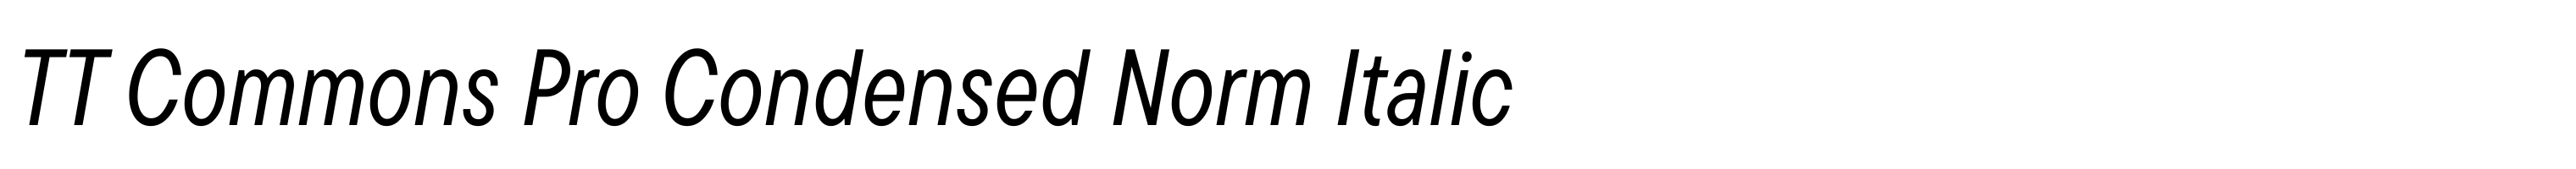 TT Commons Pro Condensed Norm Italic